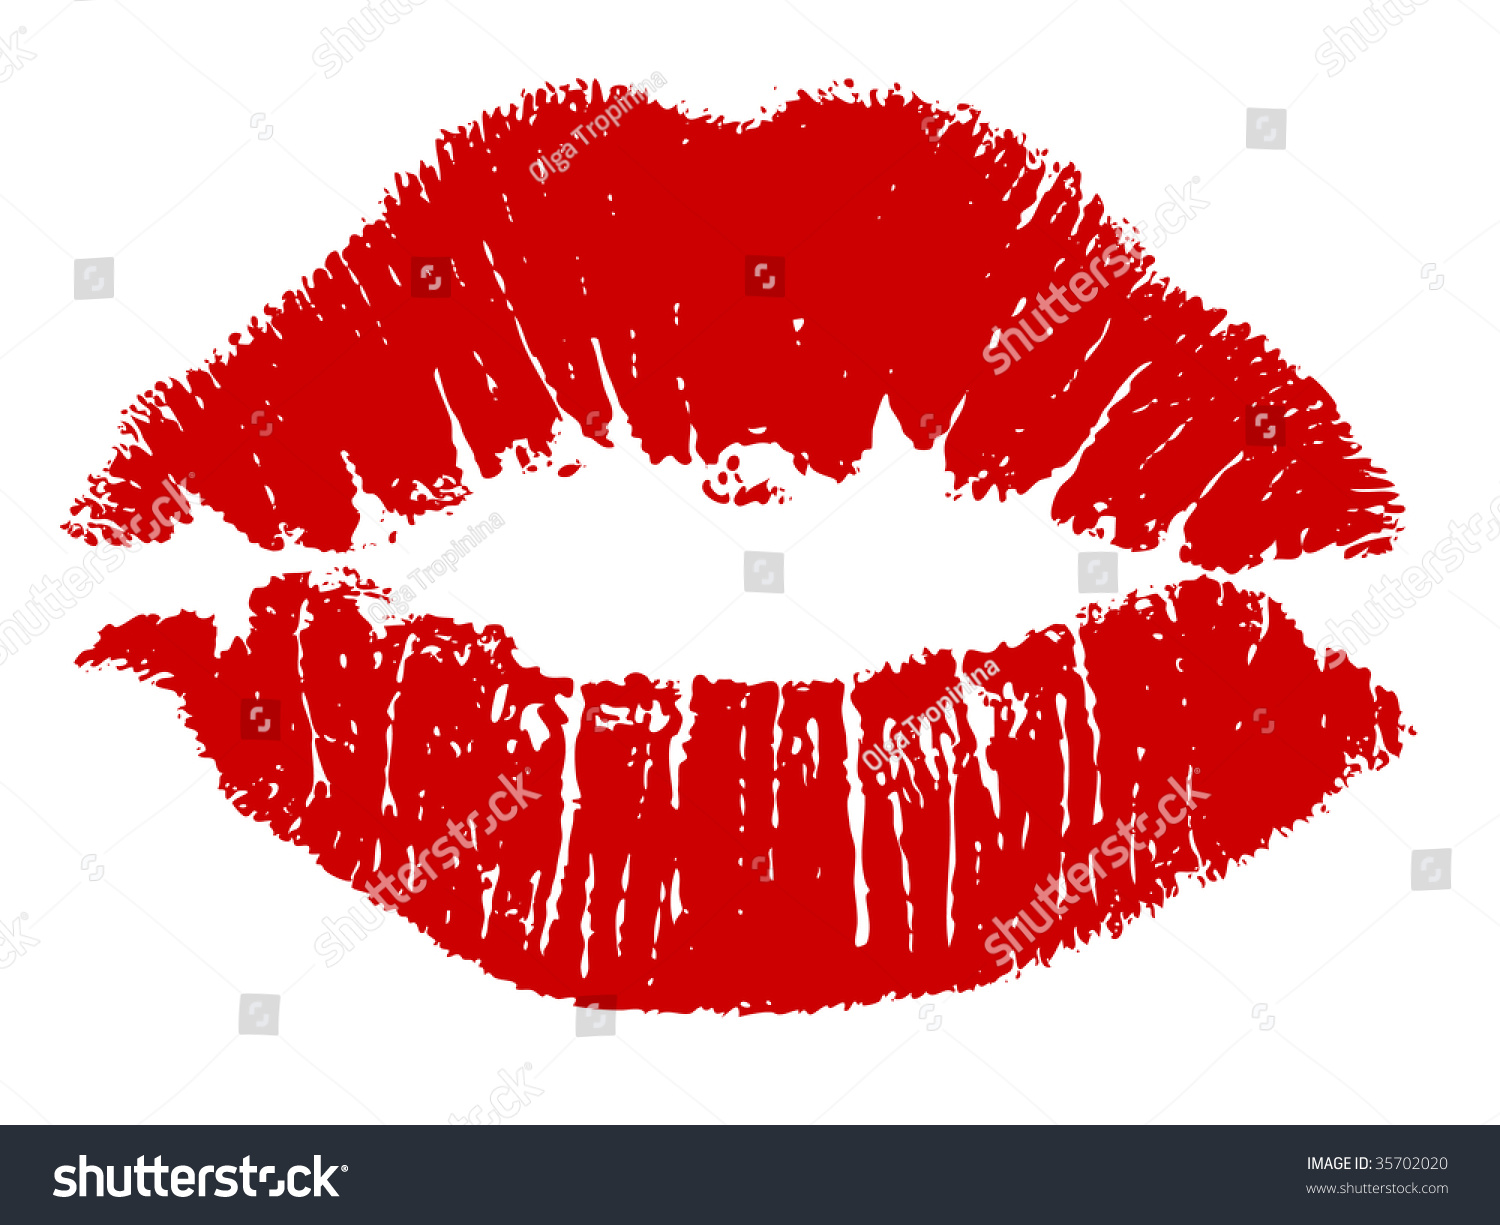 clipart red lipstick kiss - photo #21